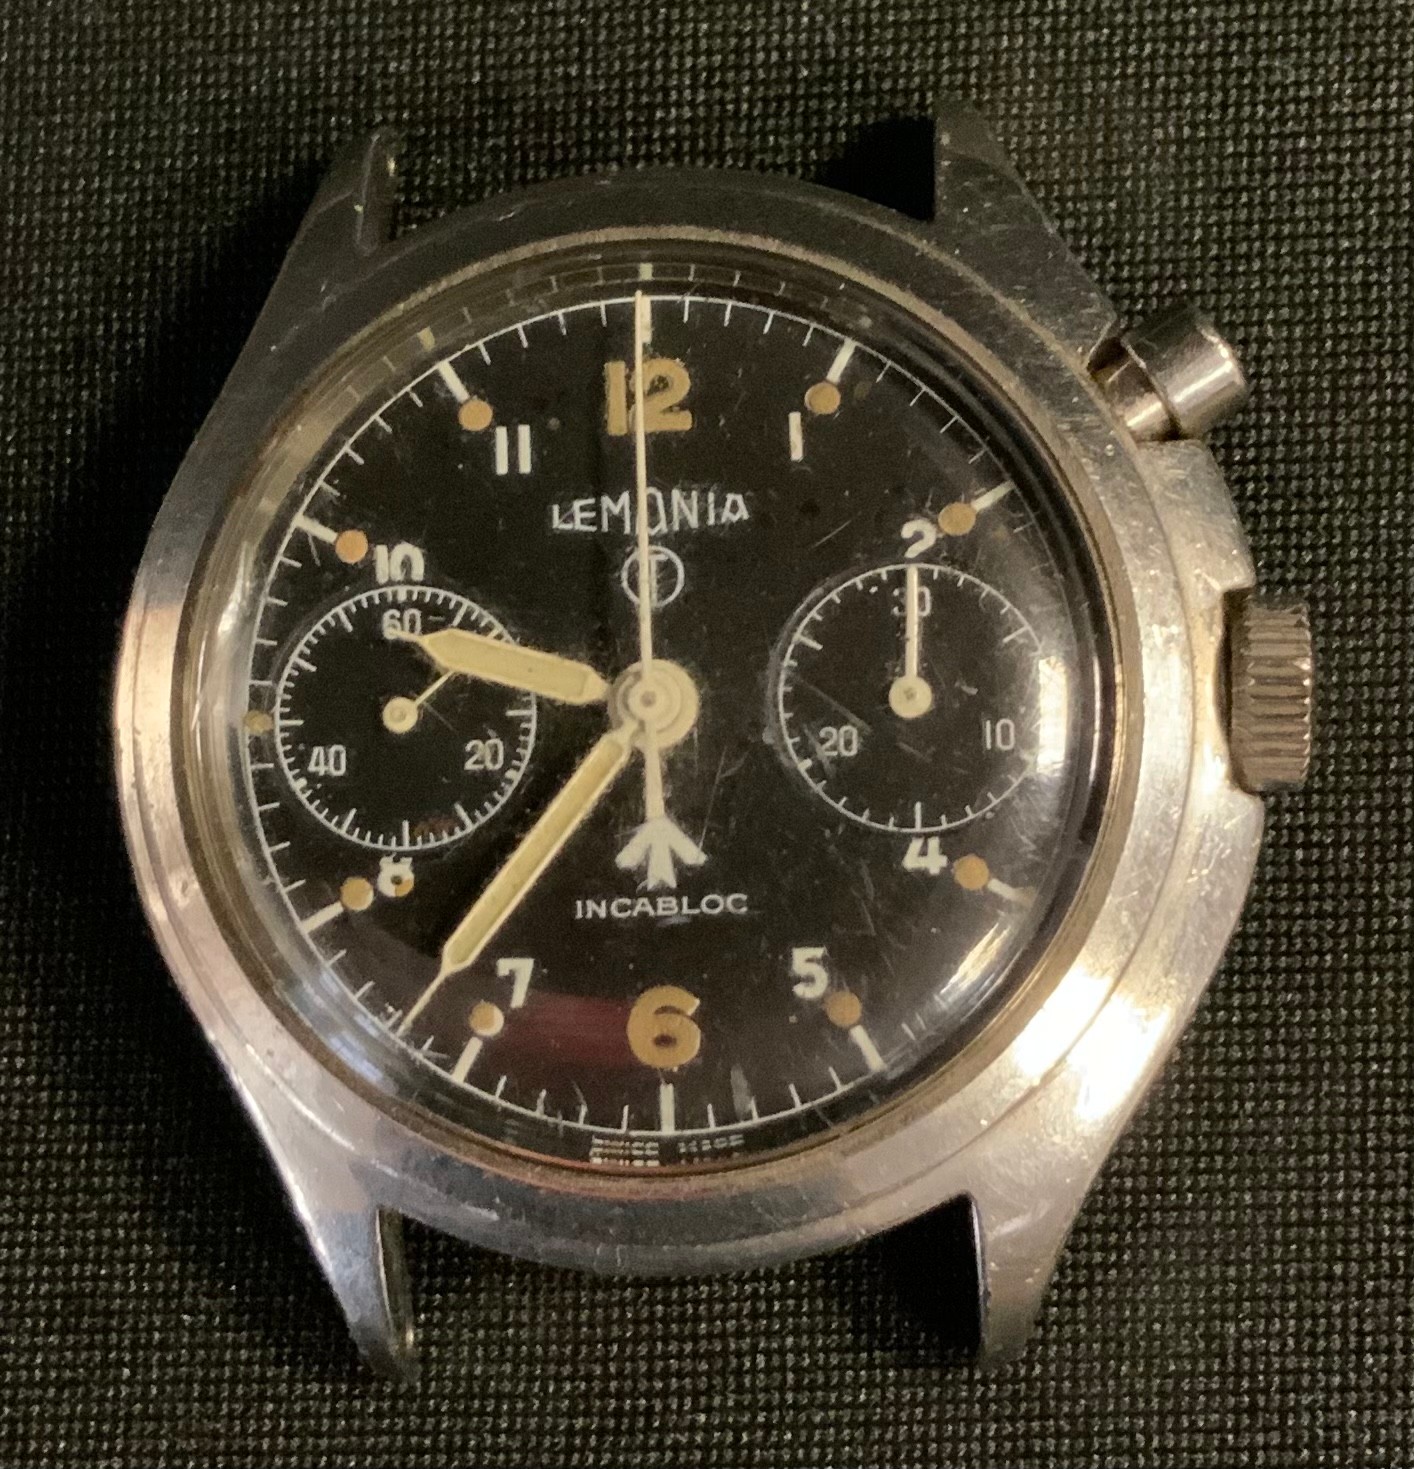 Post war British Army Lemania single button Chronometer watch head, black dial, twin subsidiary